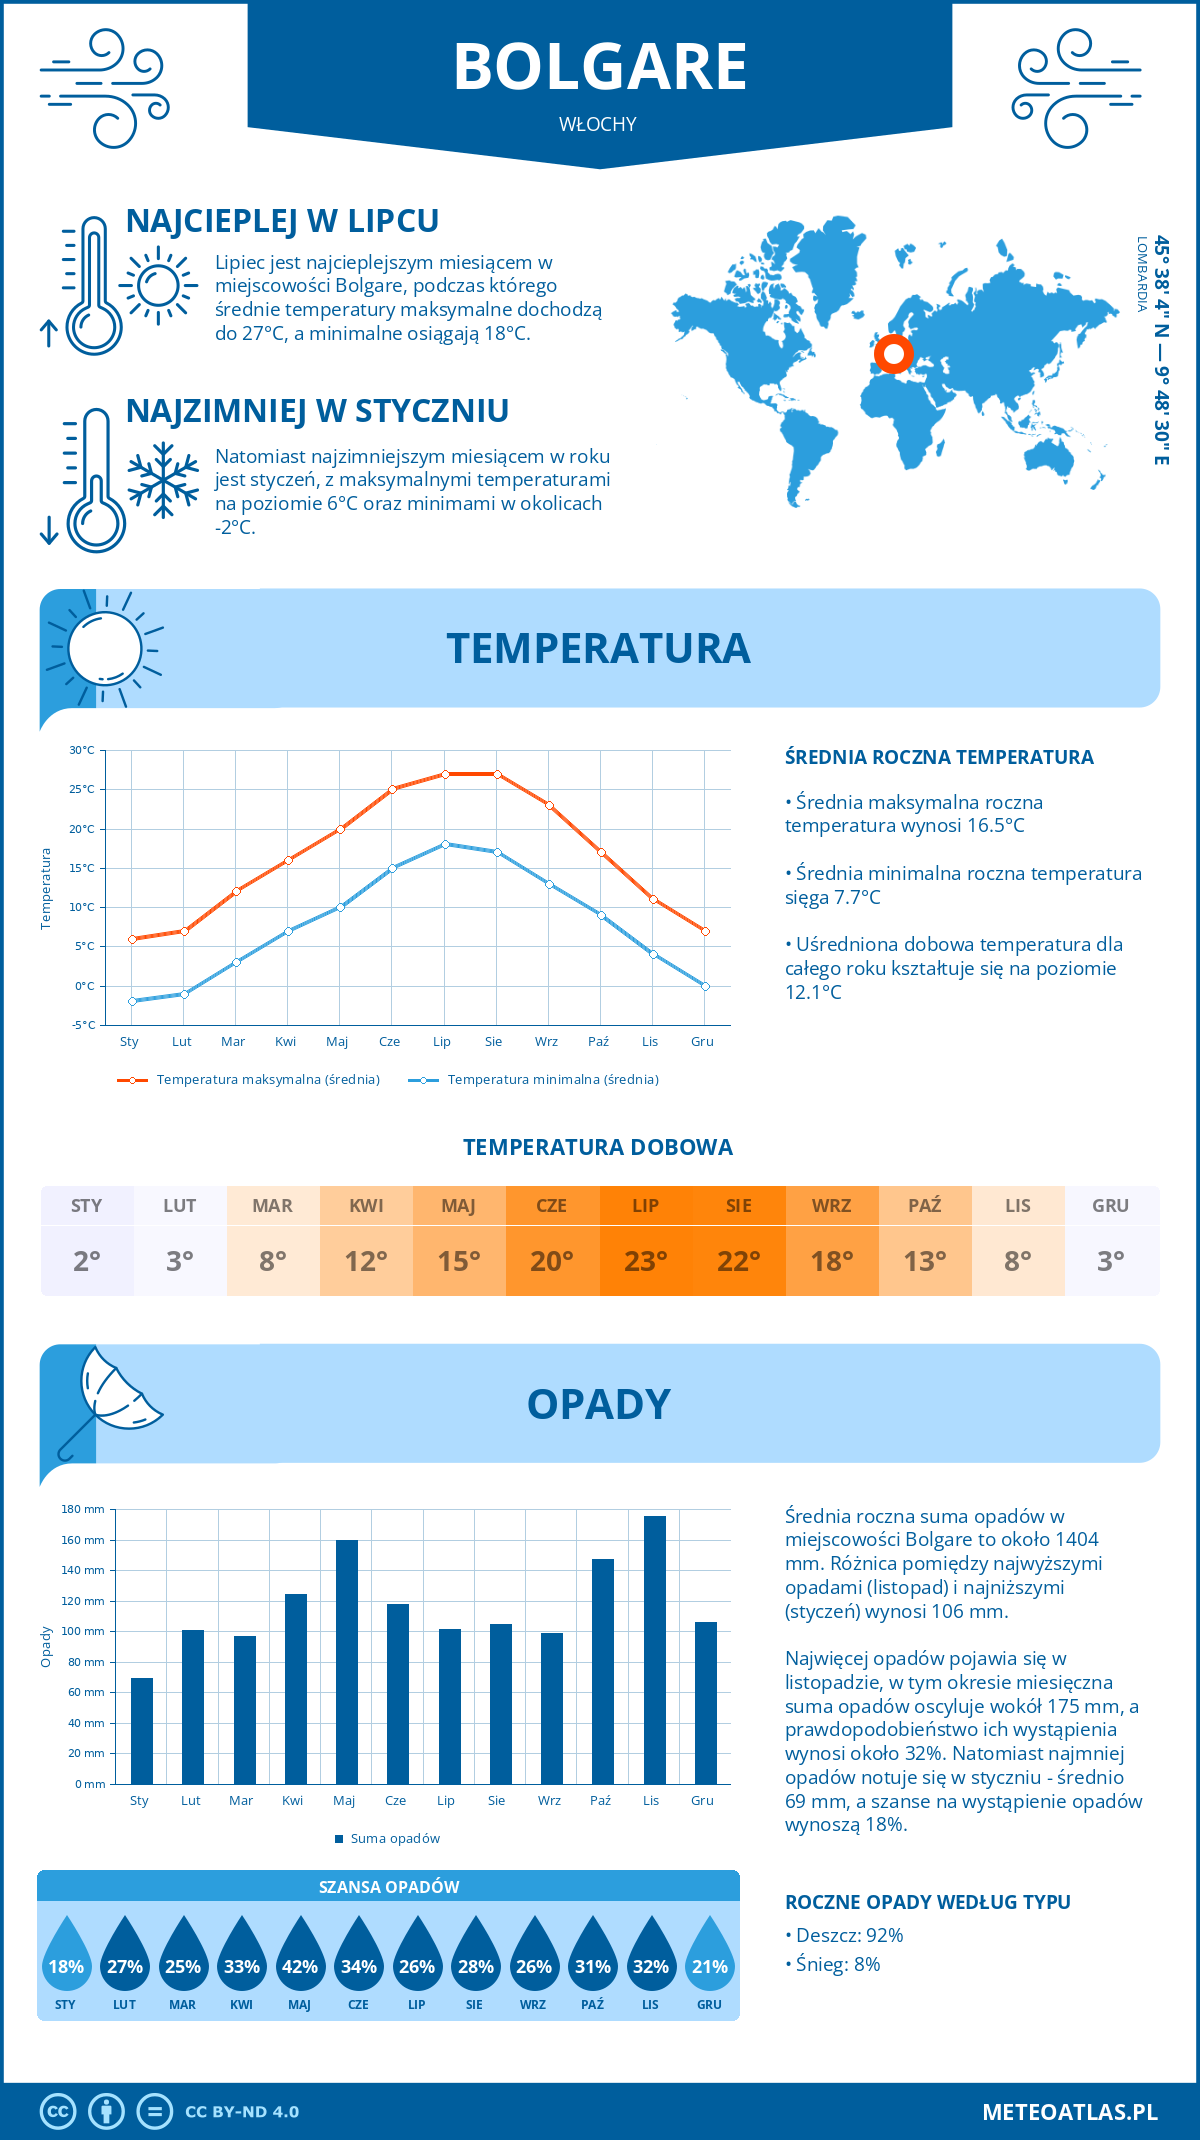 Pogoda Bolgare (Włochy). Temperatura oraz opady.